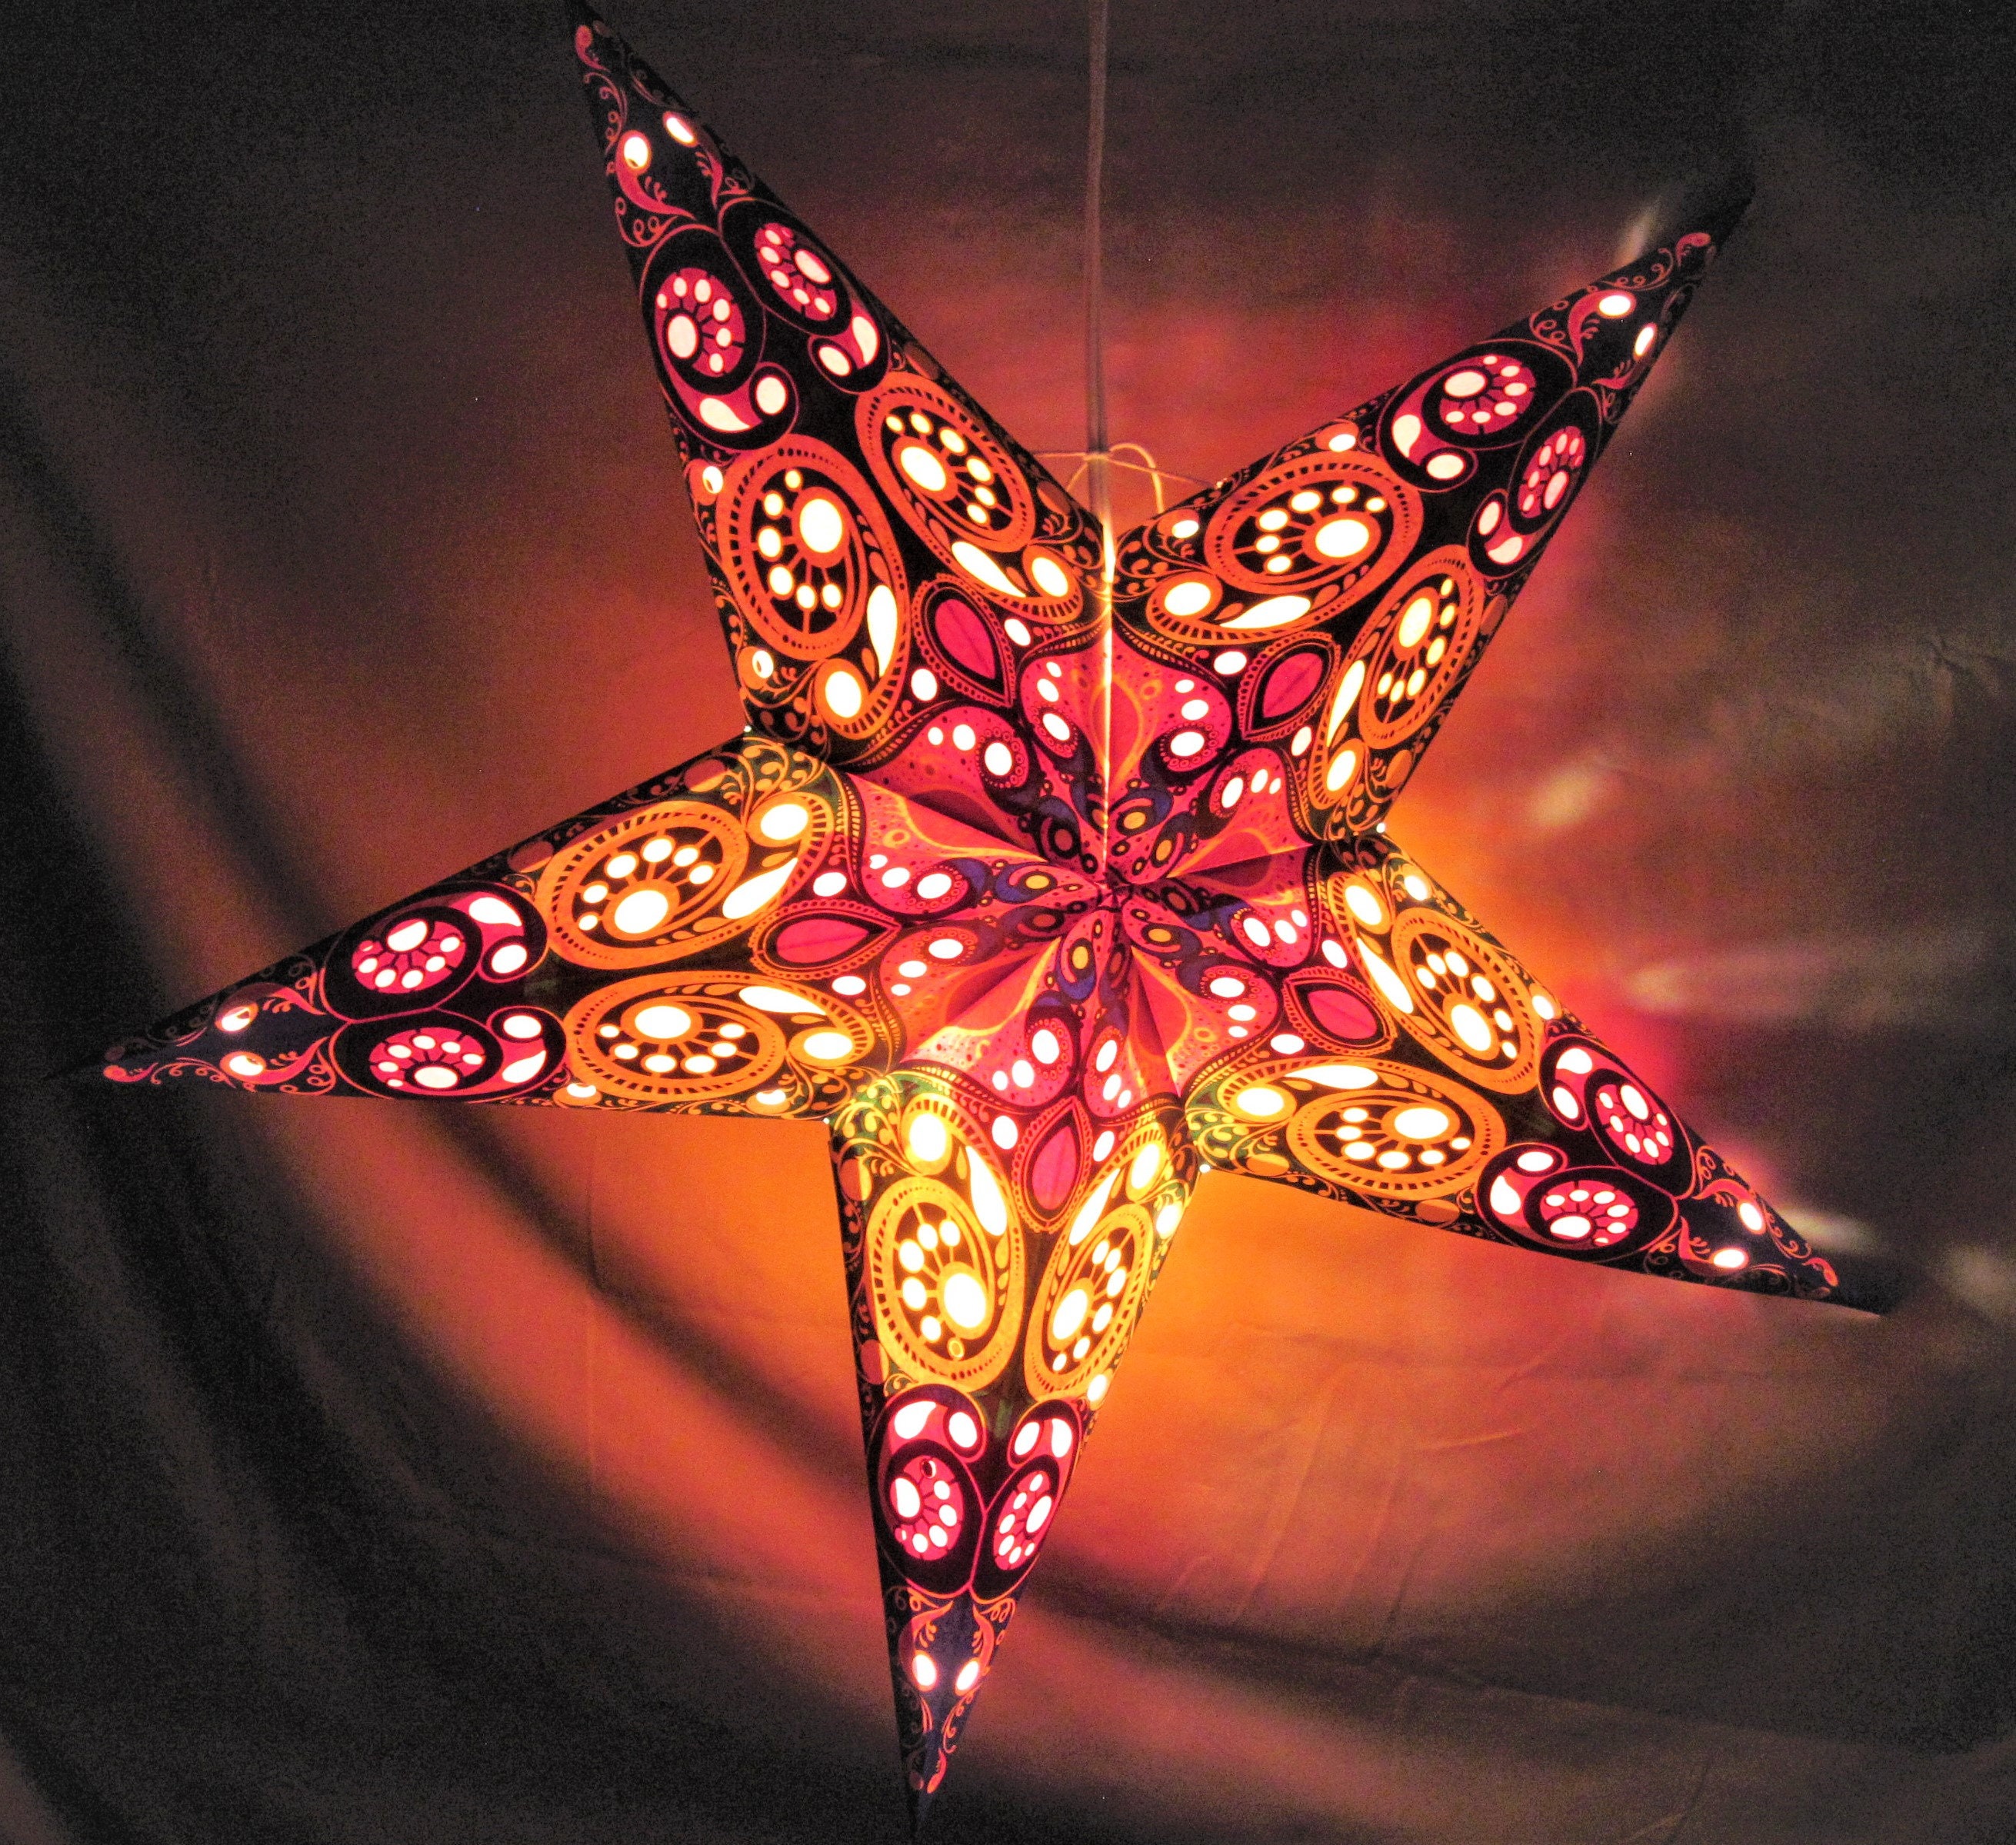 Marrakesh Lantern with String Lights, Red